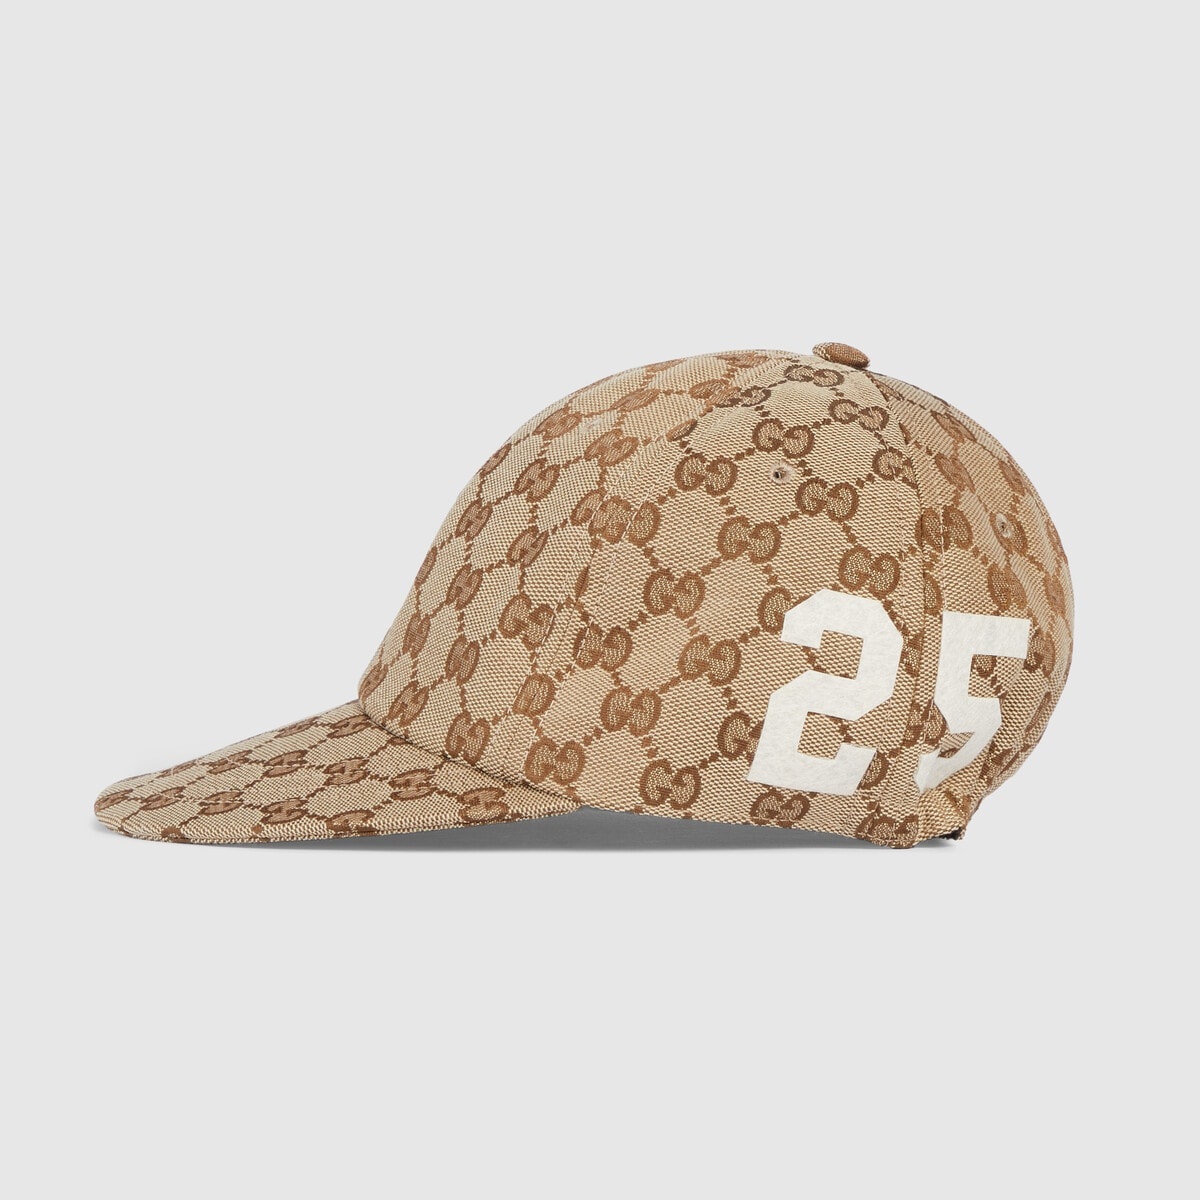 GG cotton canvas baseball hat - 2